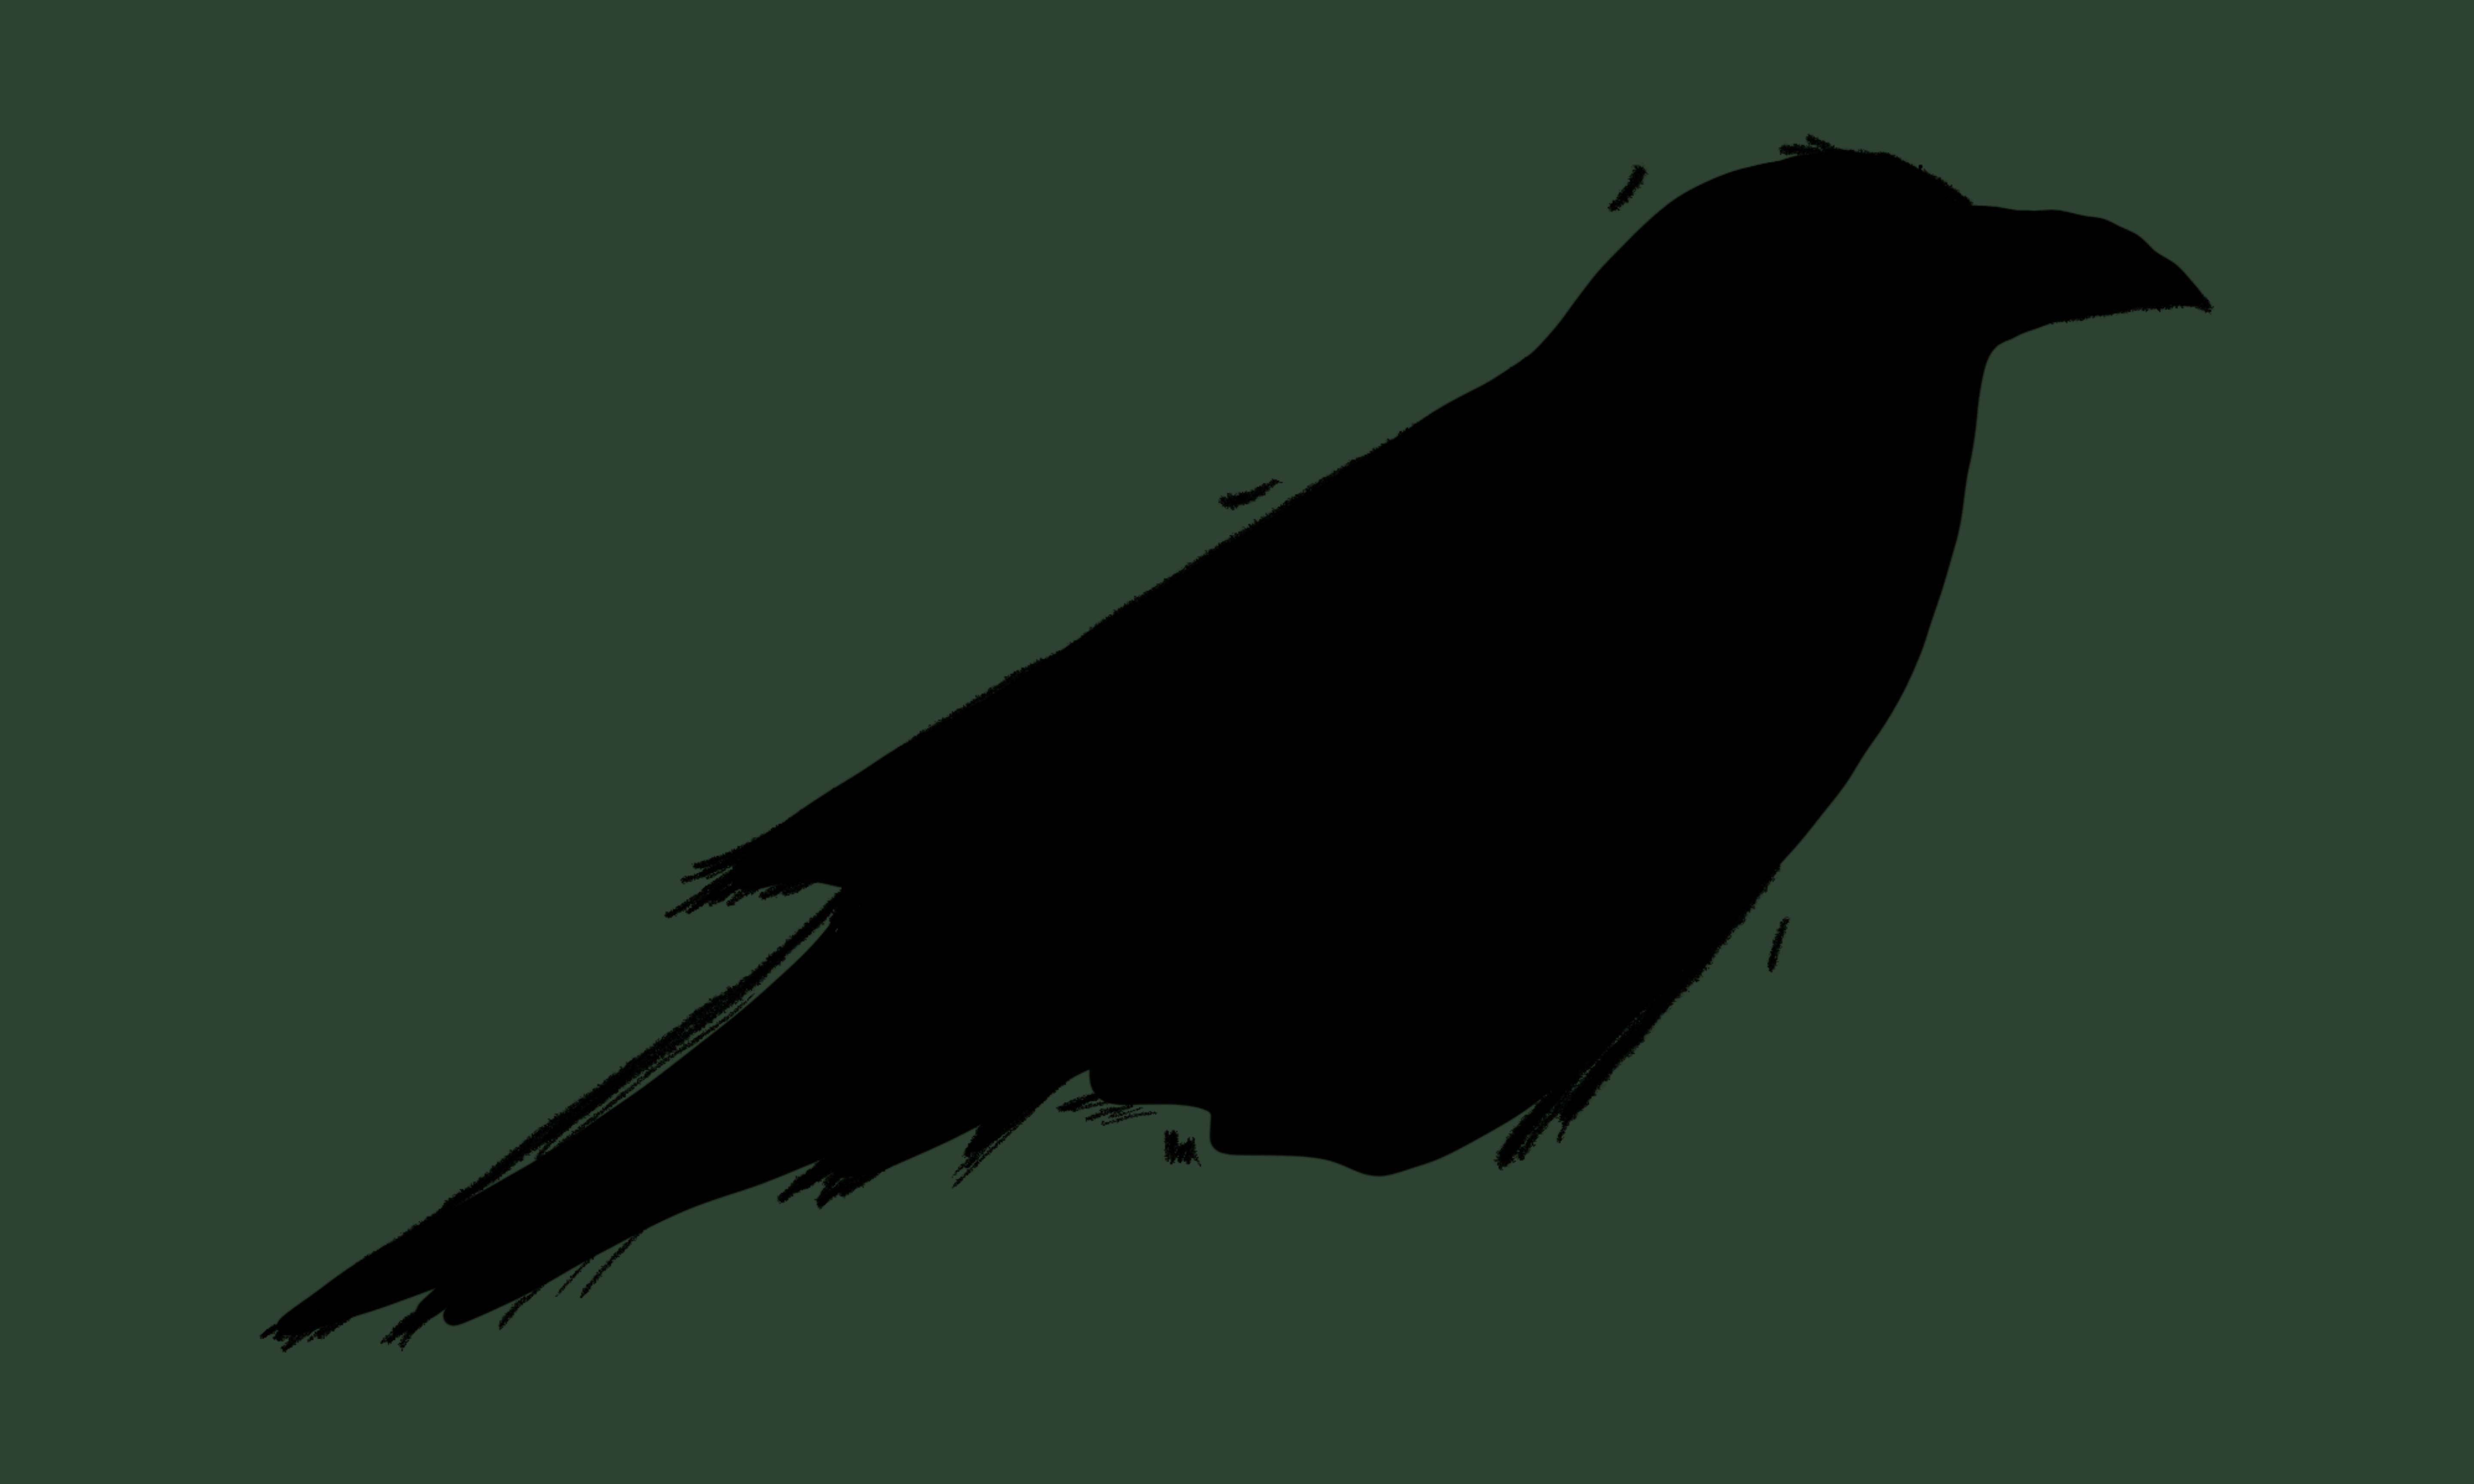 The Legend of Yatagarasu, the three-legged crow and its possible origins